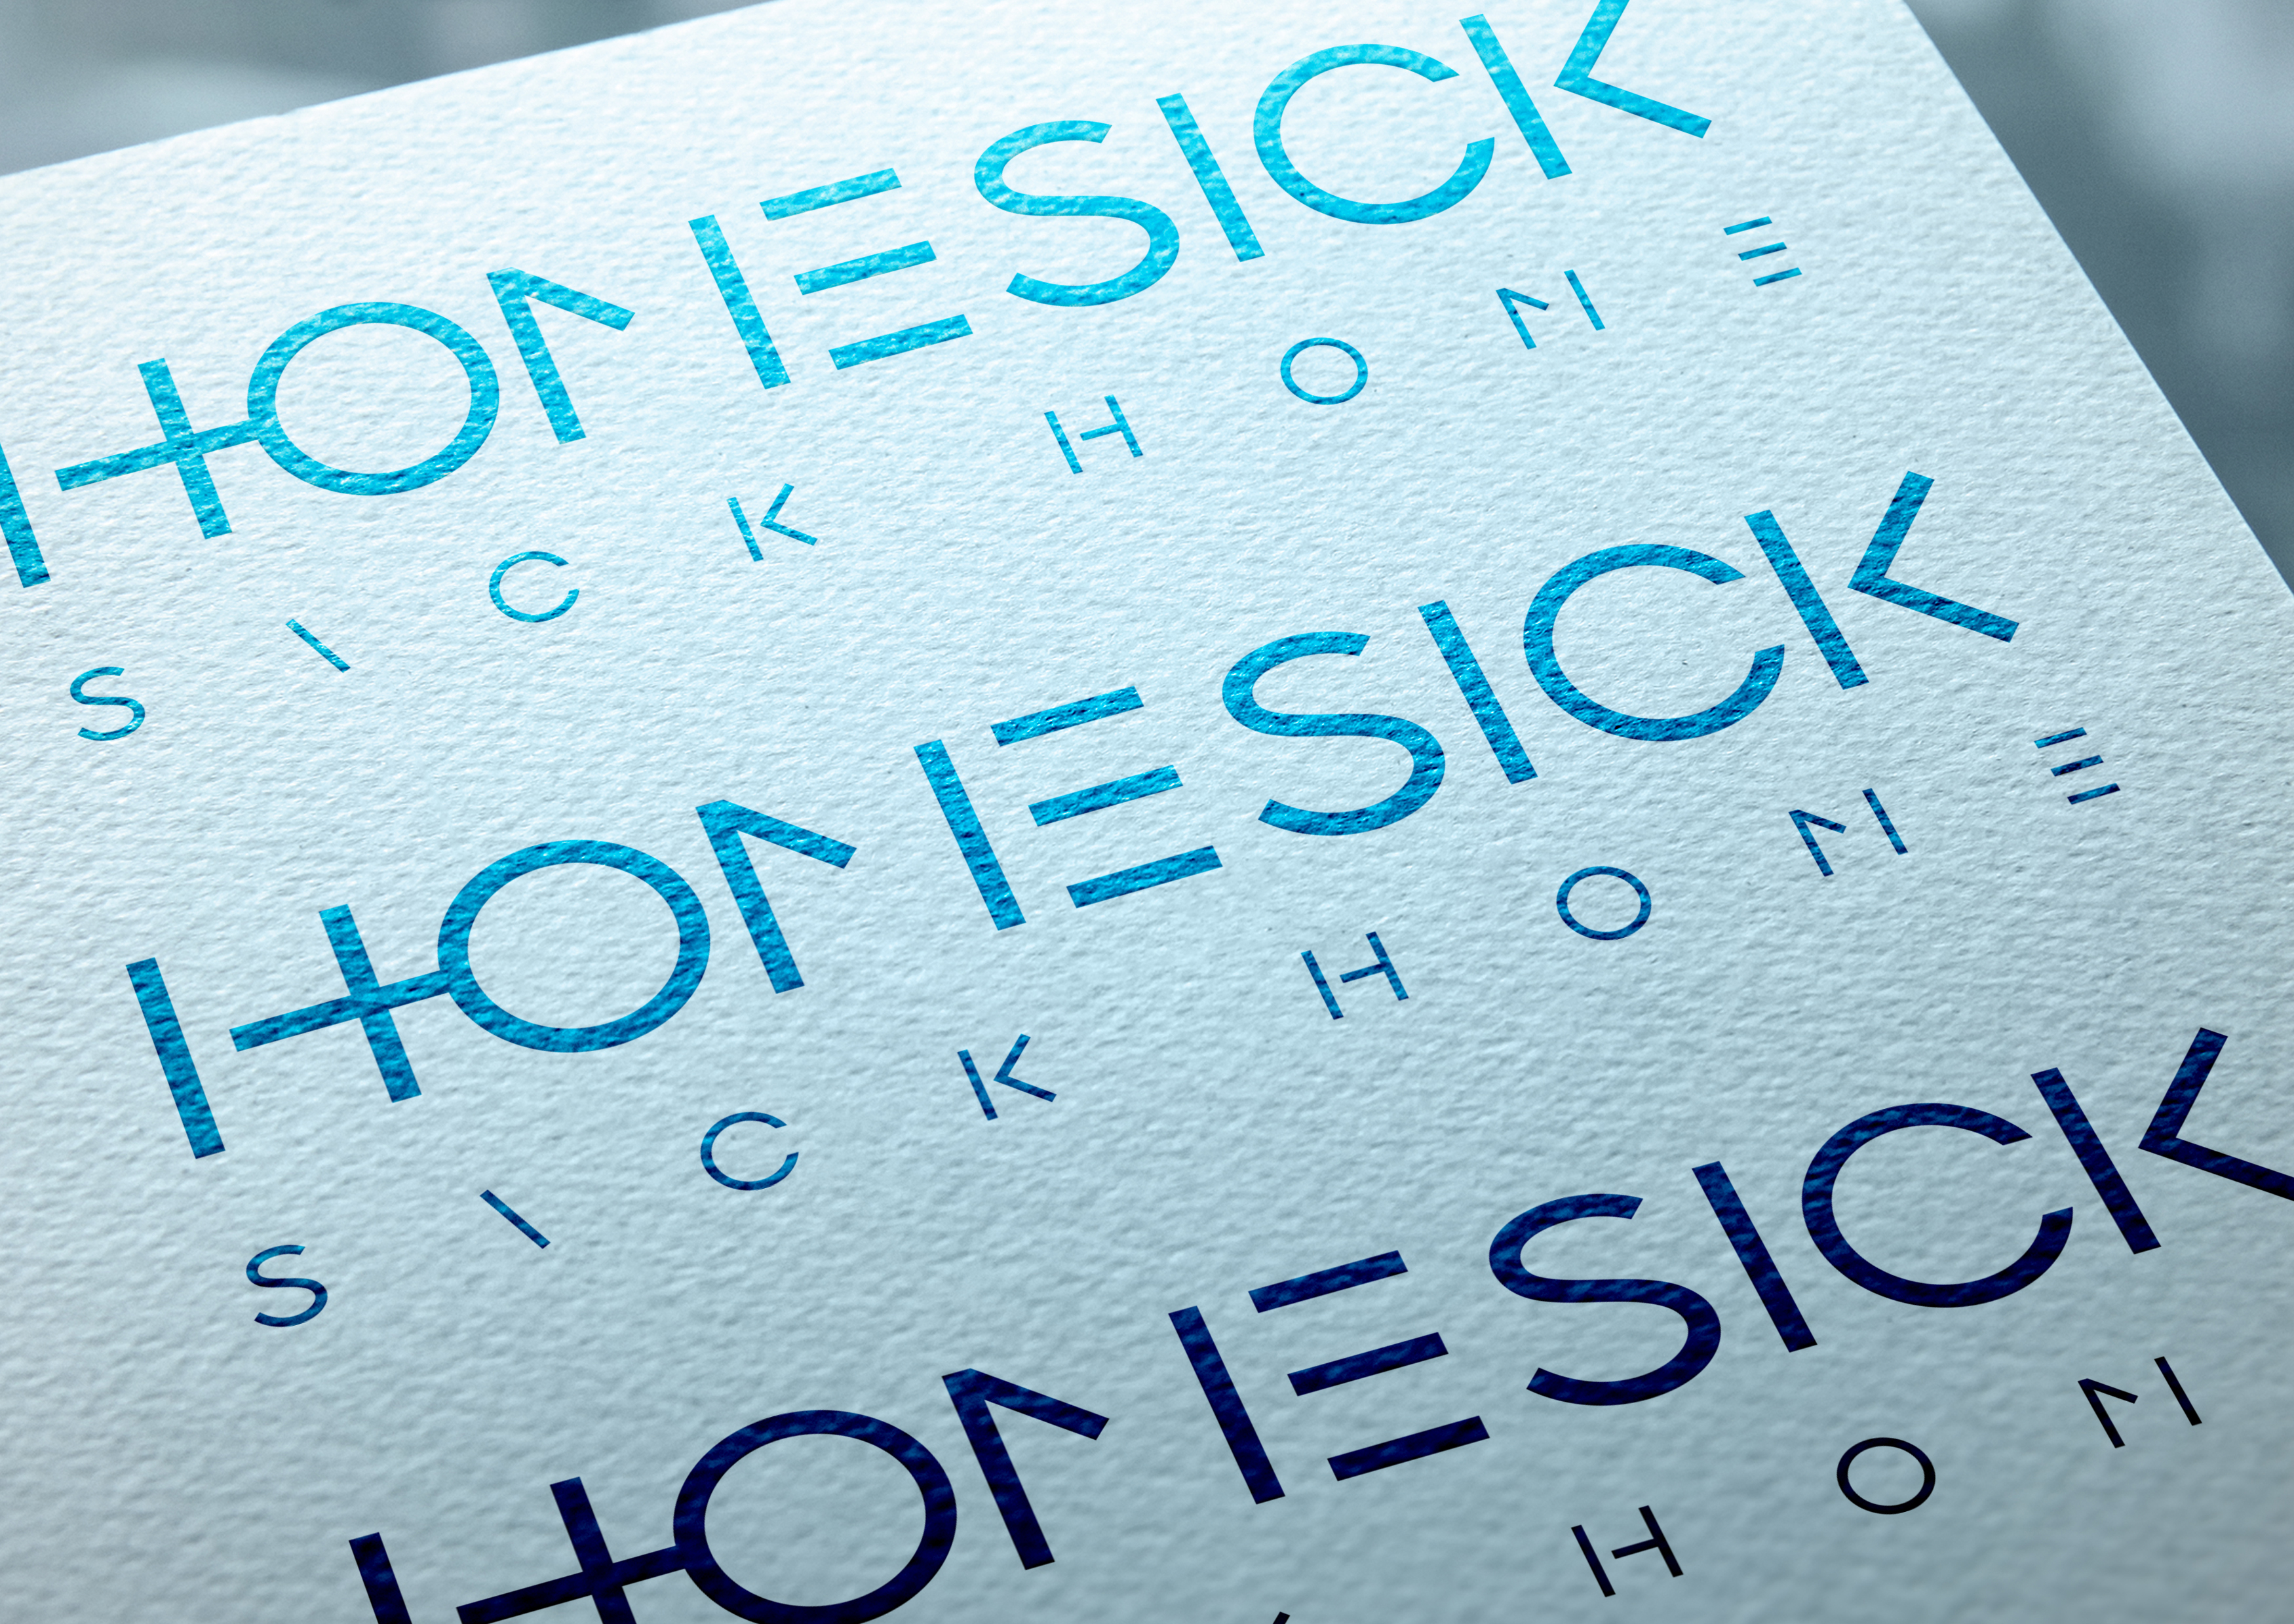 Homesick - sick home 2